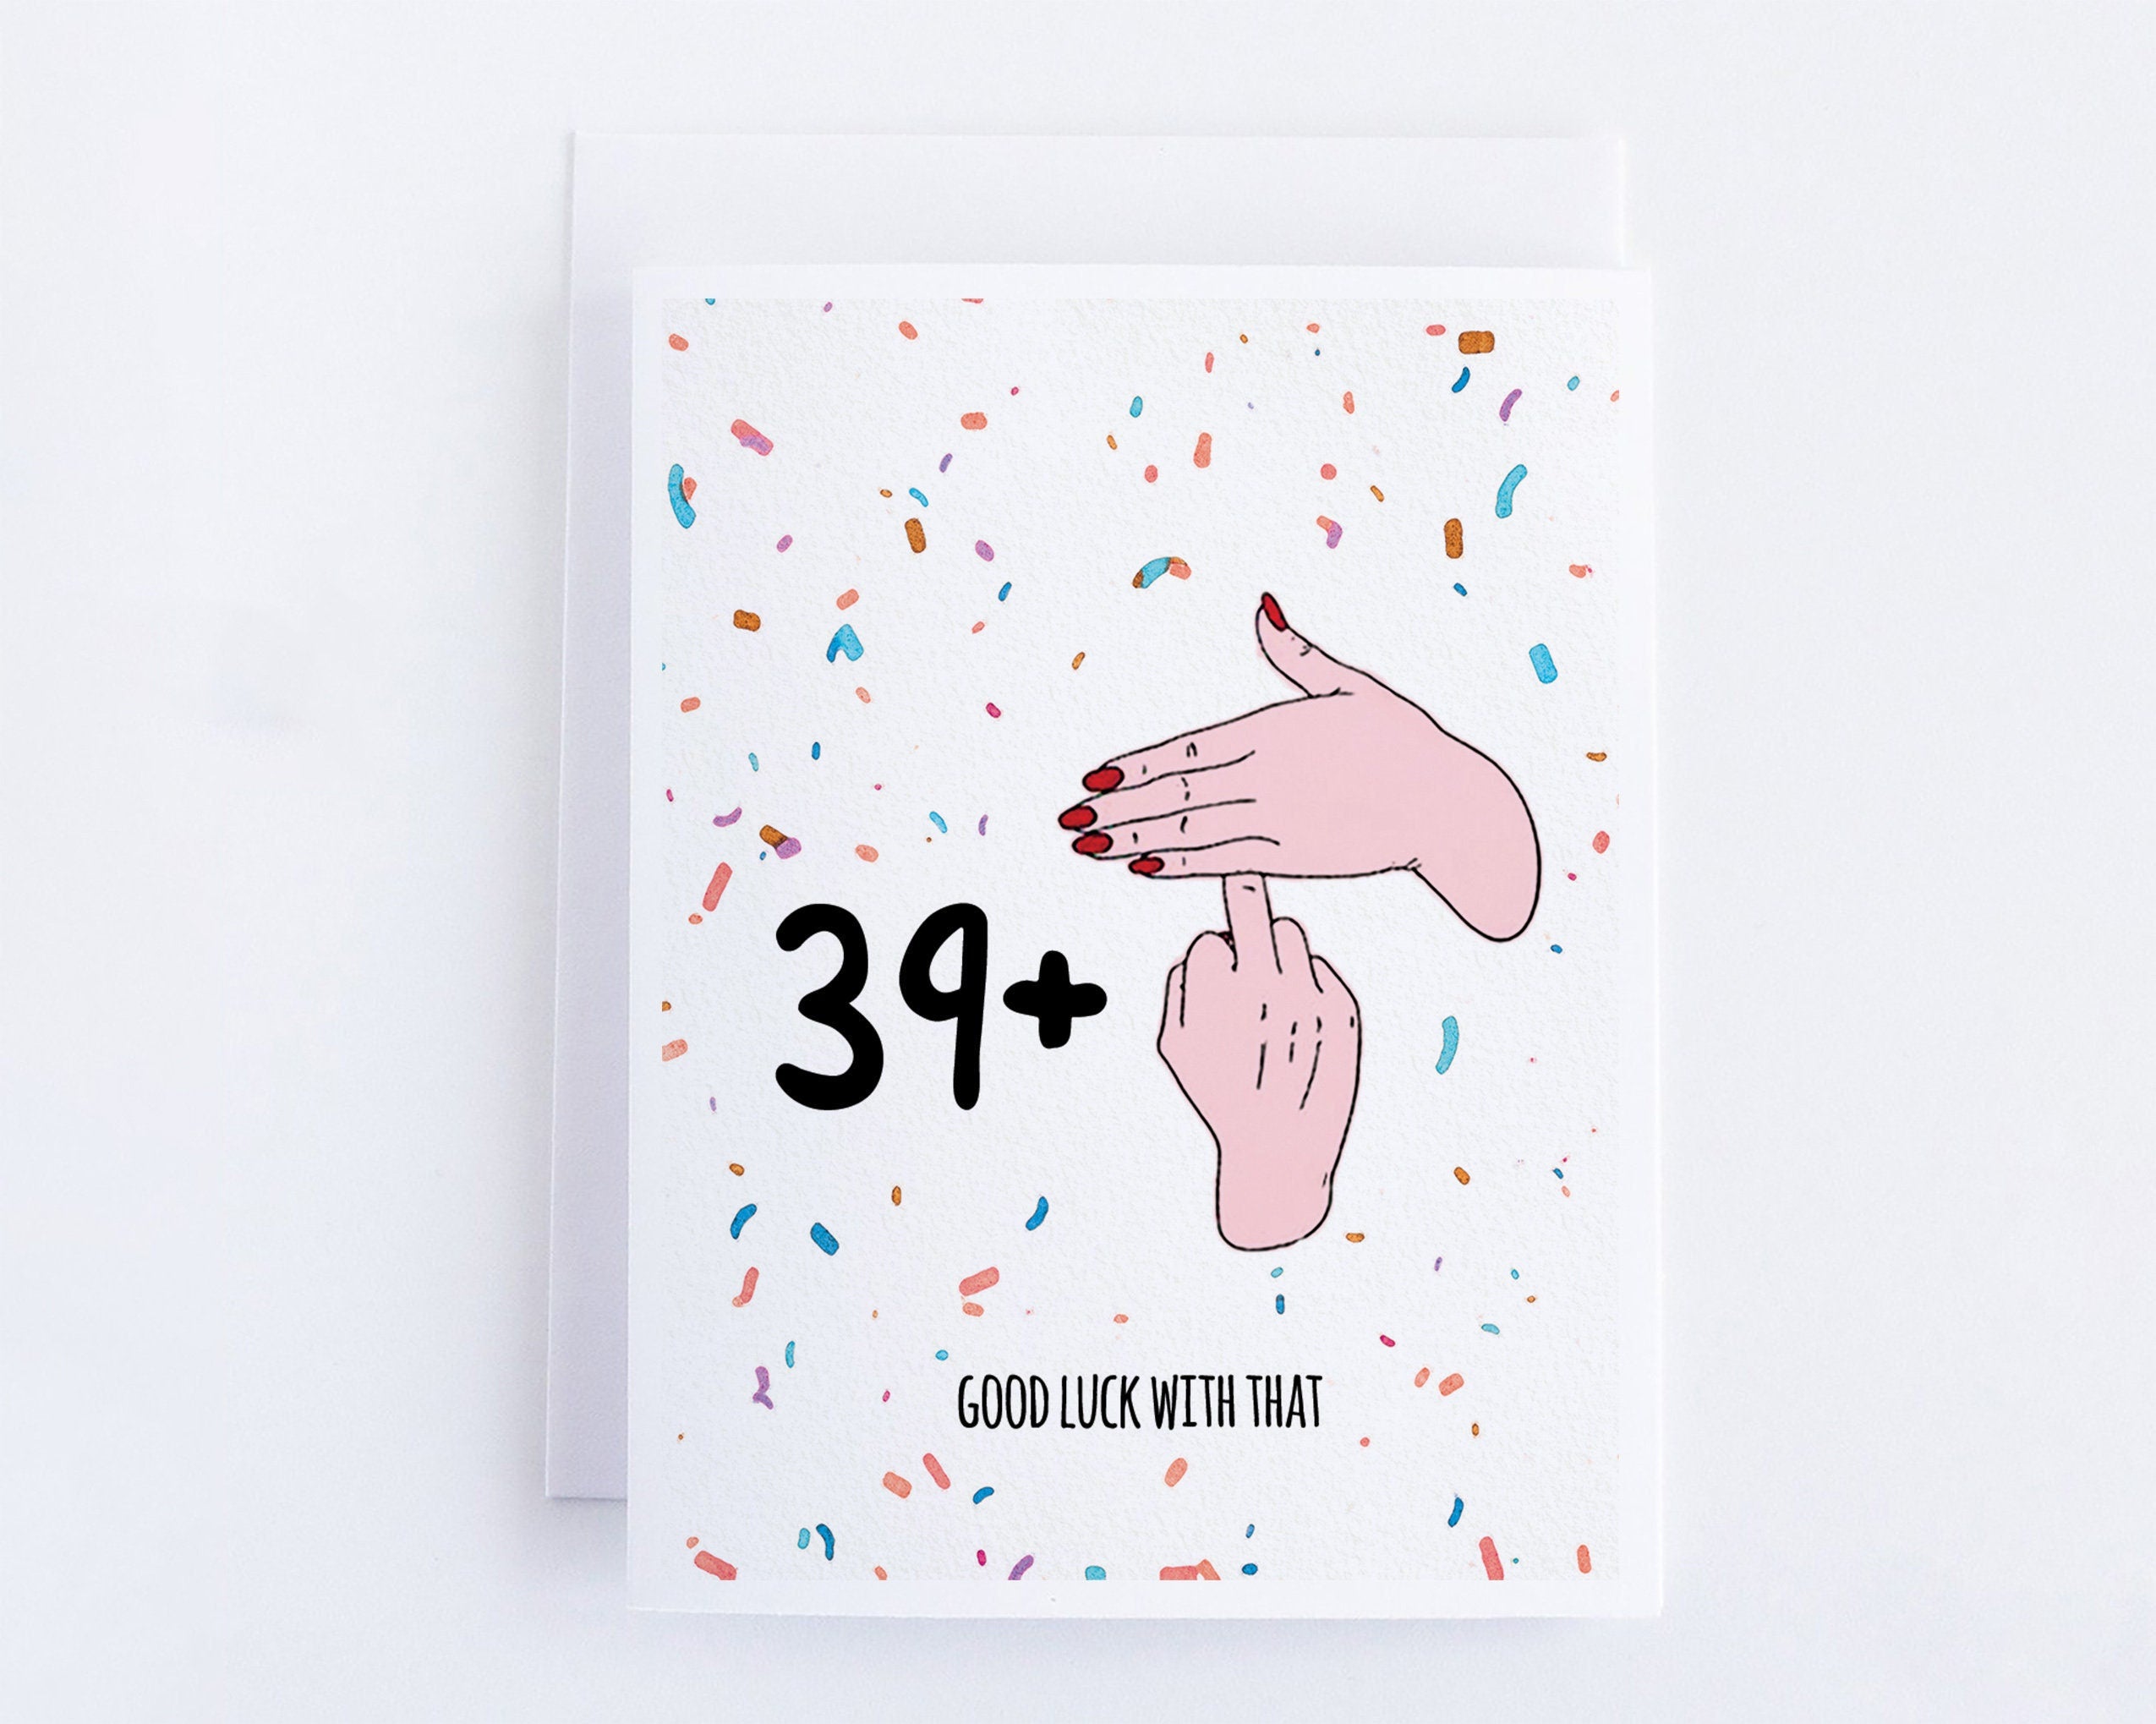 Funny/alternative/banter/cheeky/rude 40th BIRTHDAY CARD friend